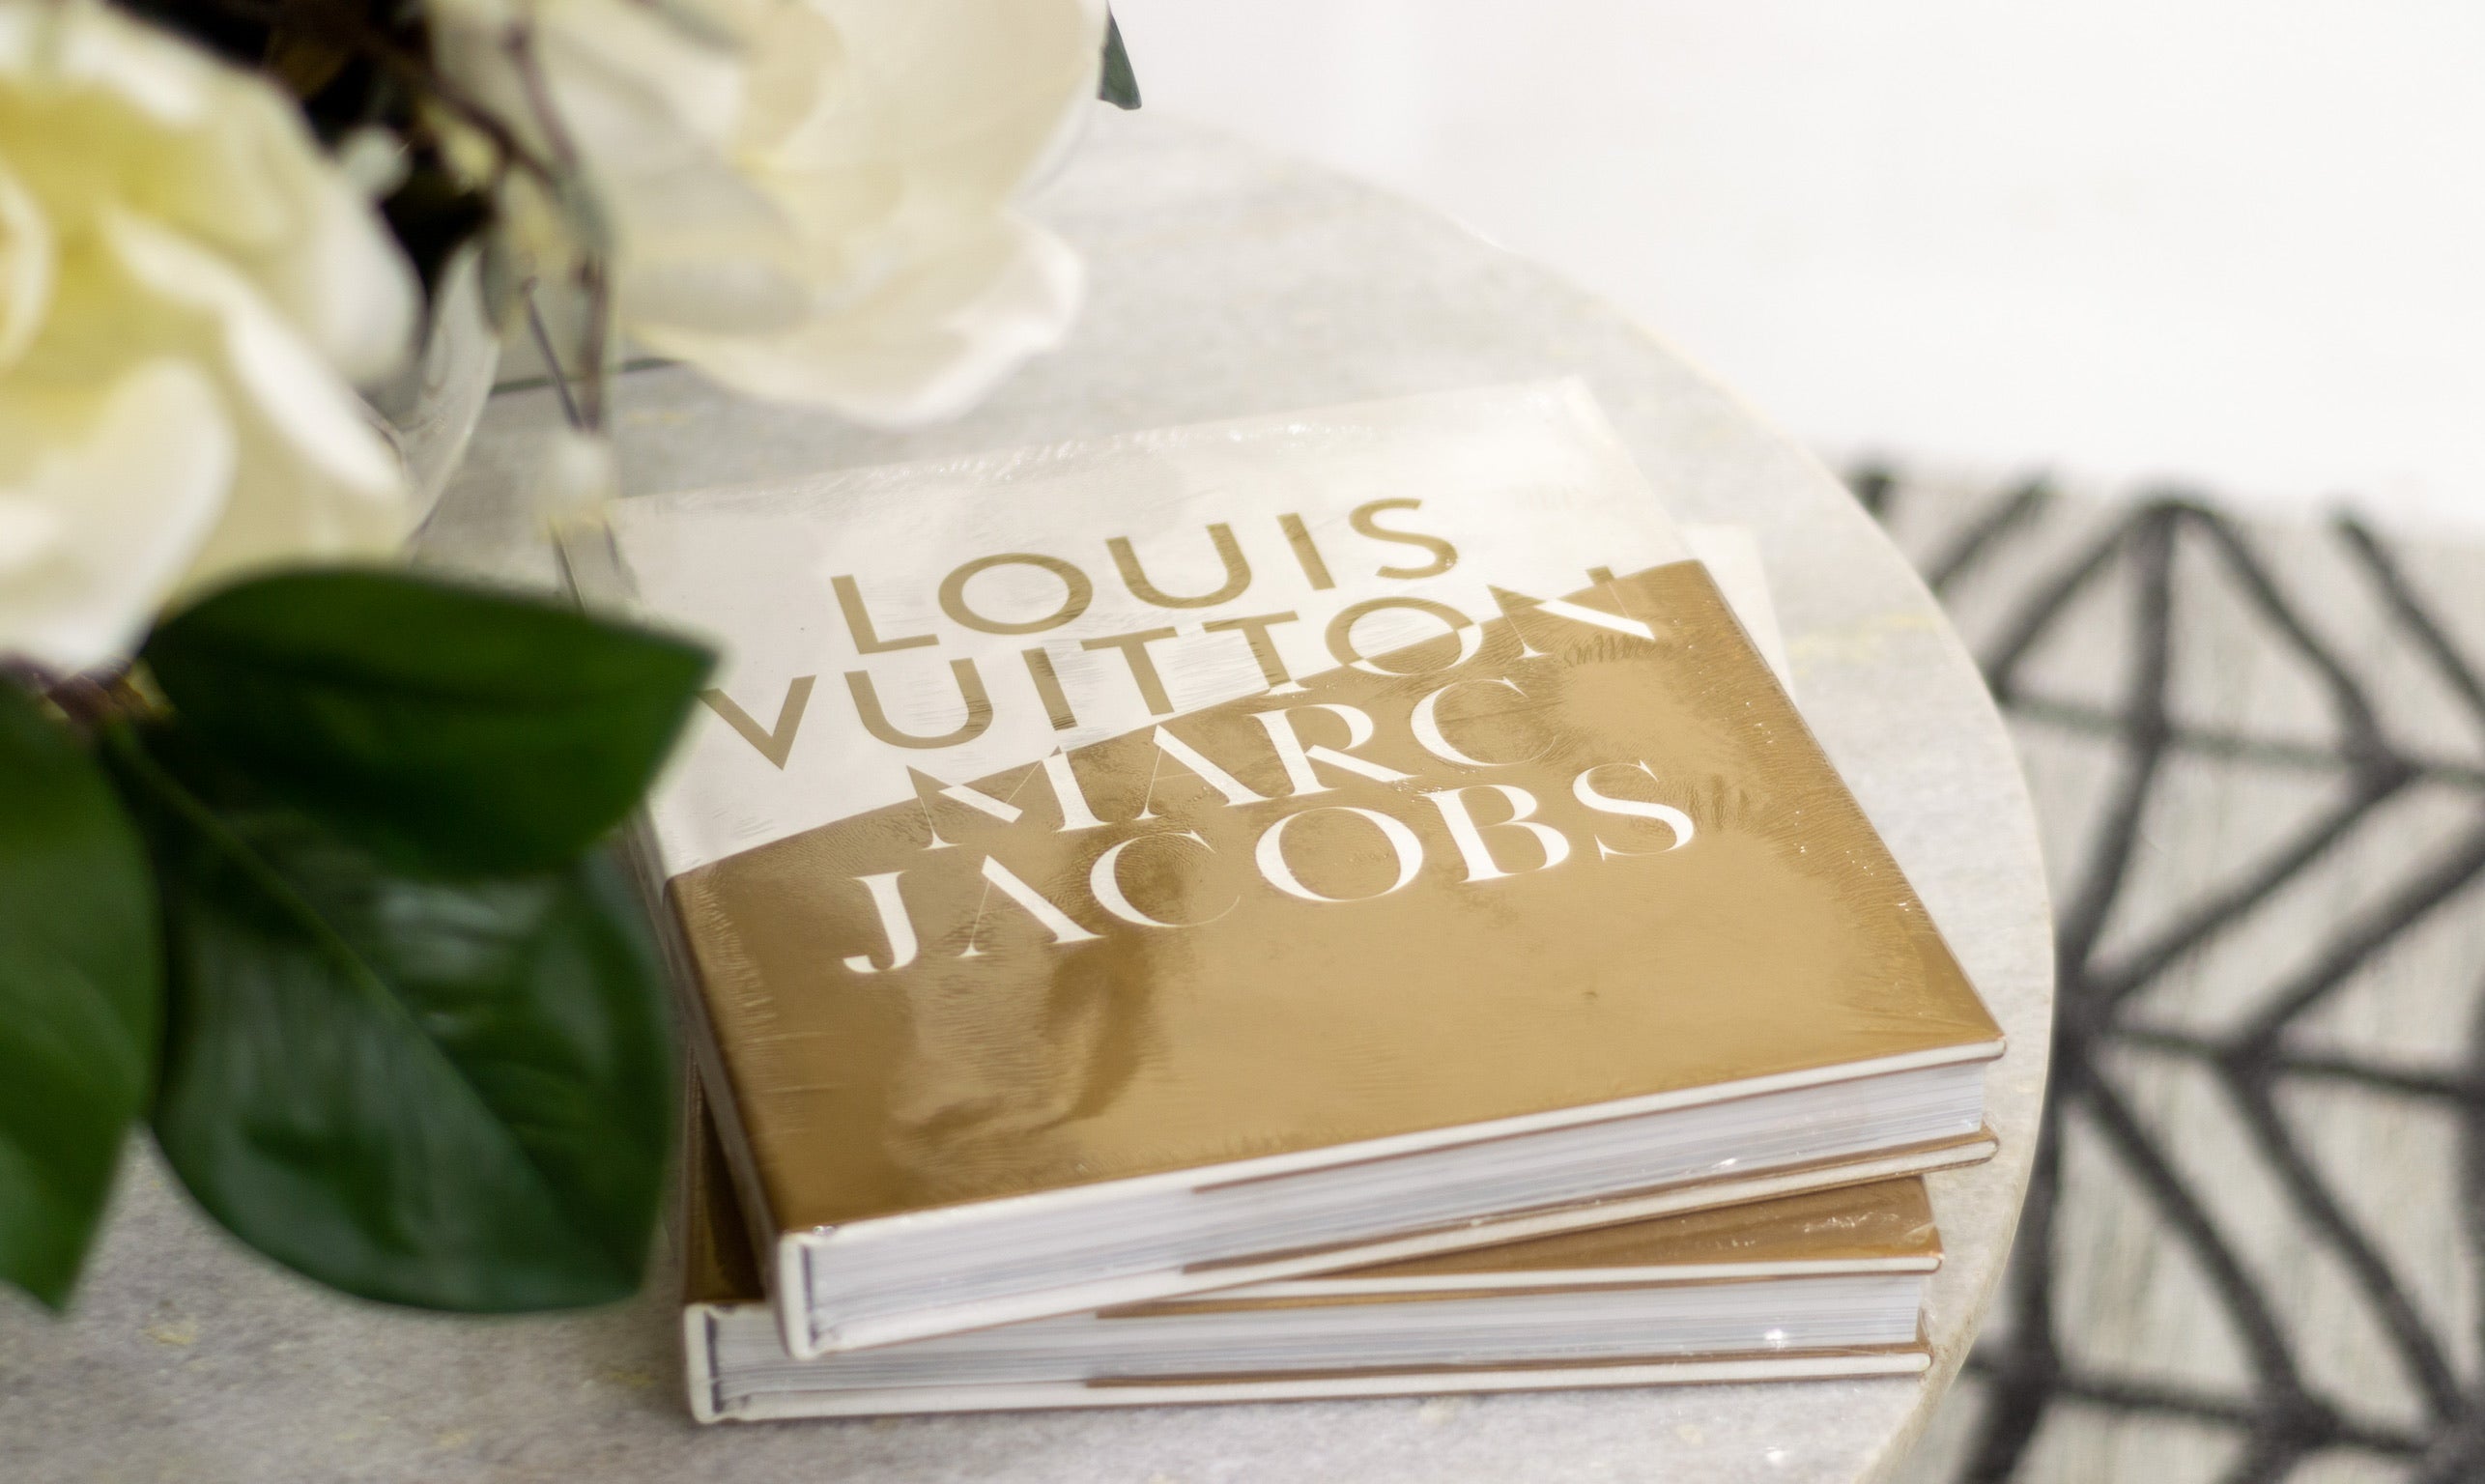 Louis Vuitton / Marc Jacobs by Pamela Golbin